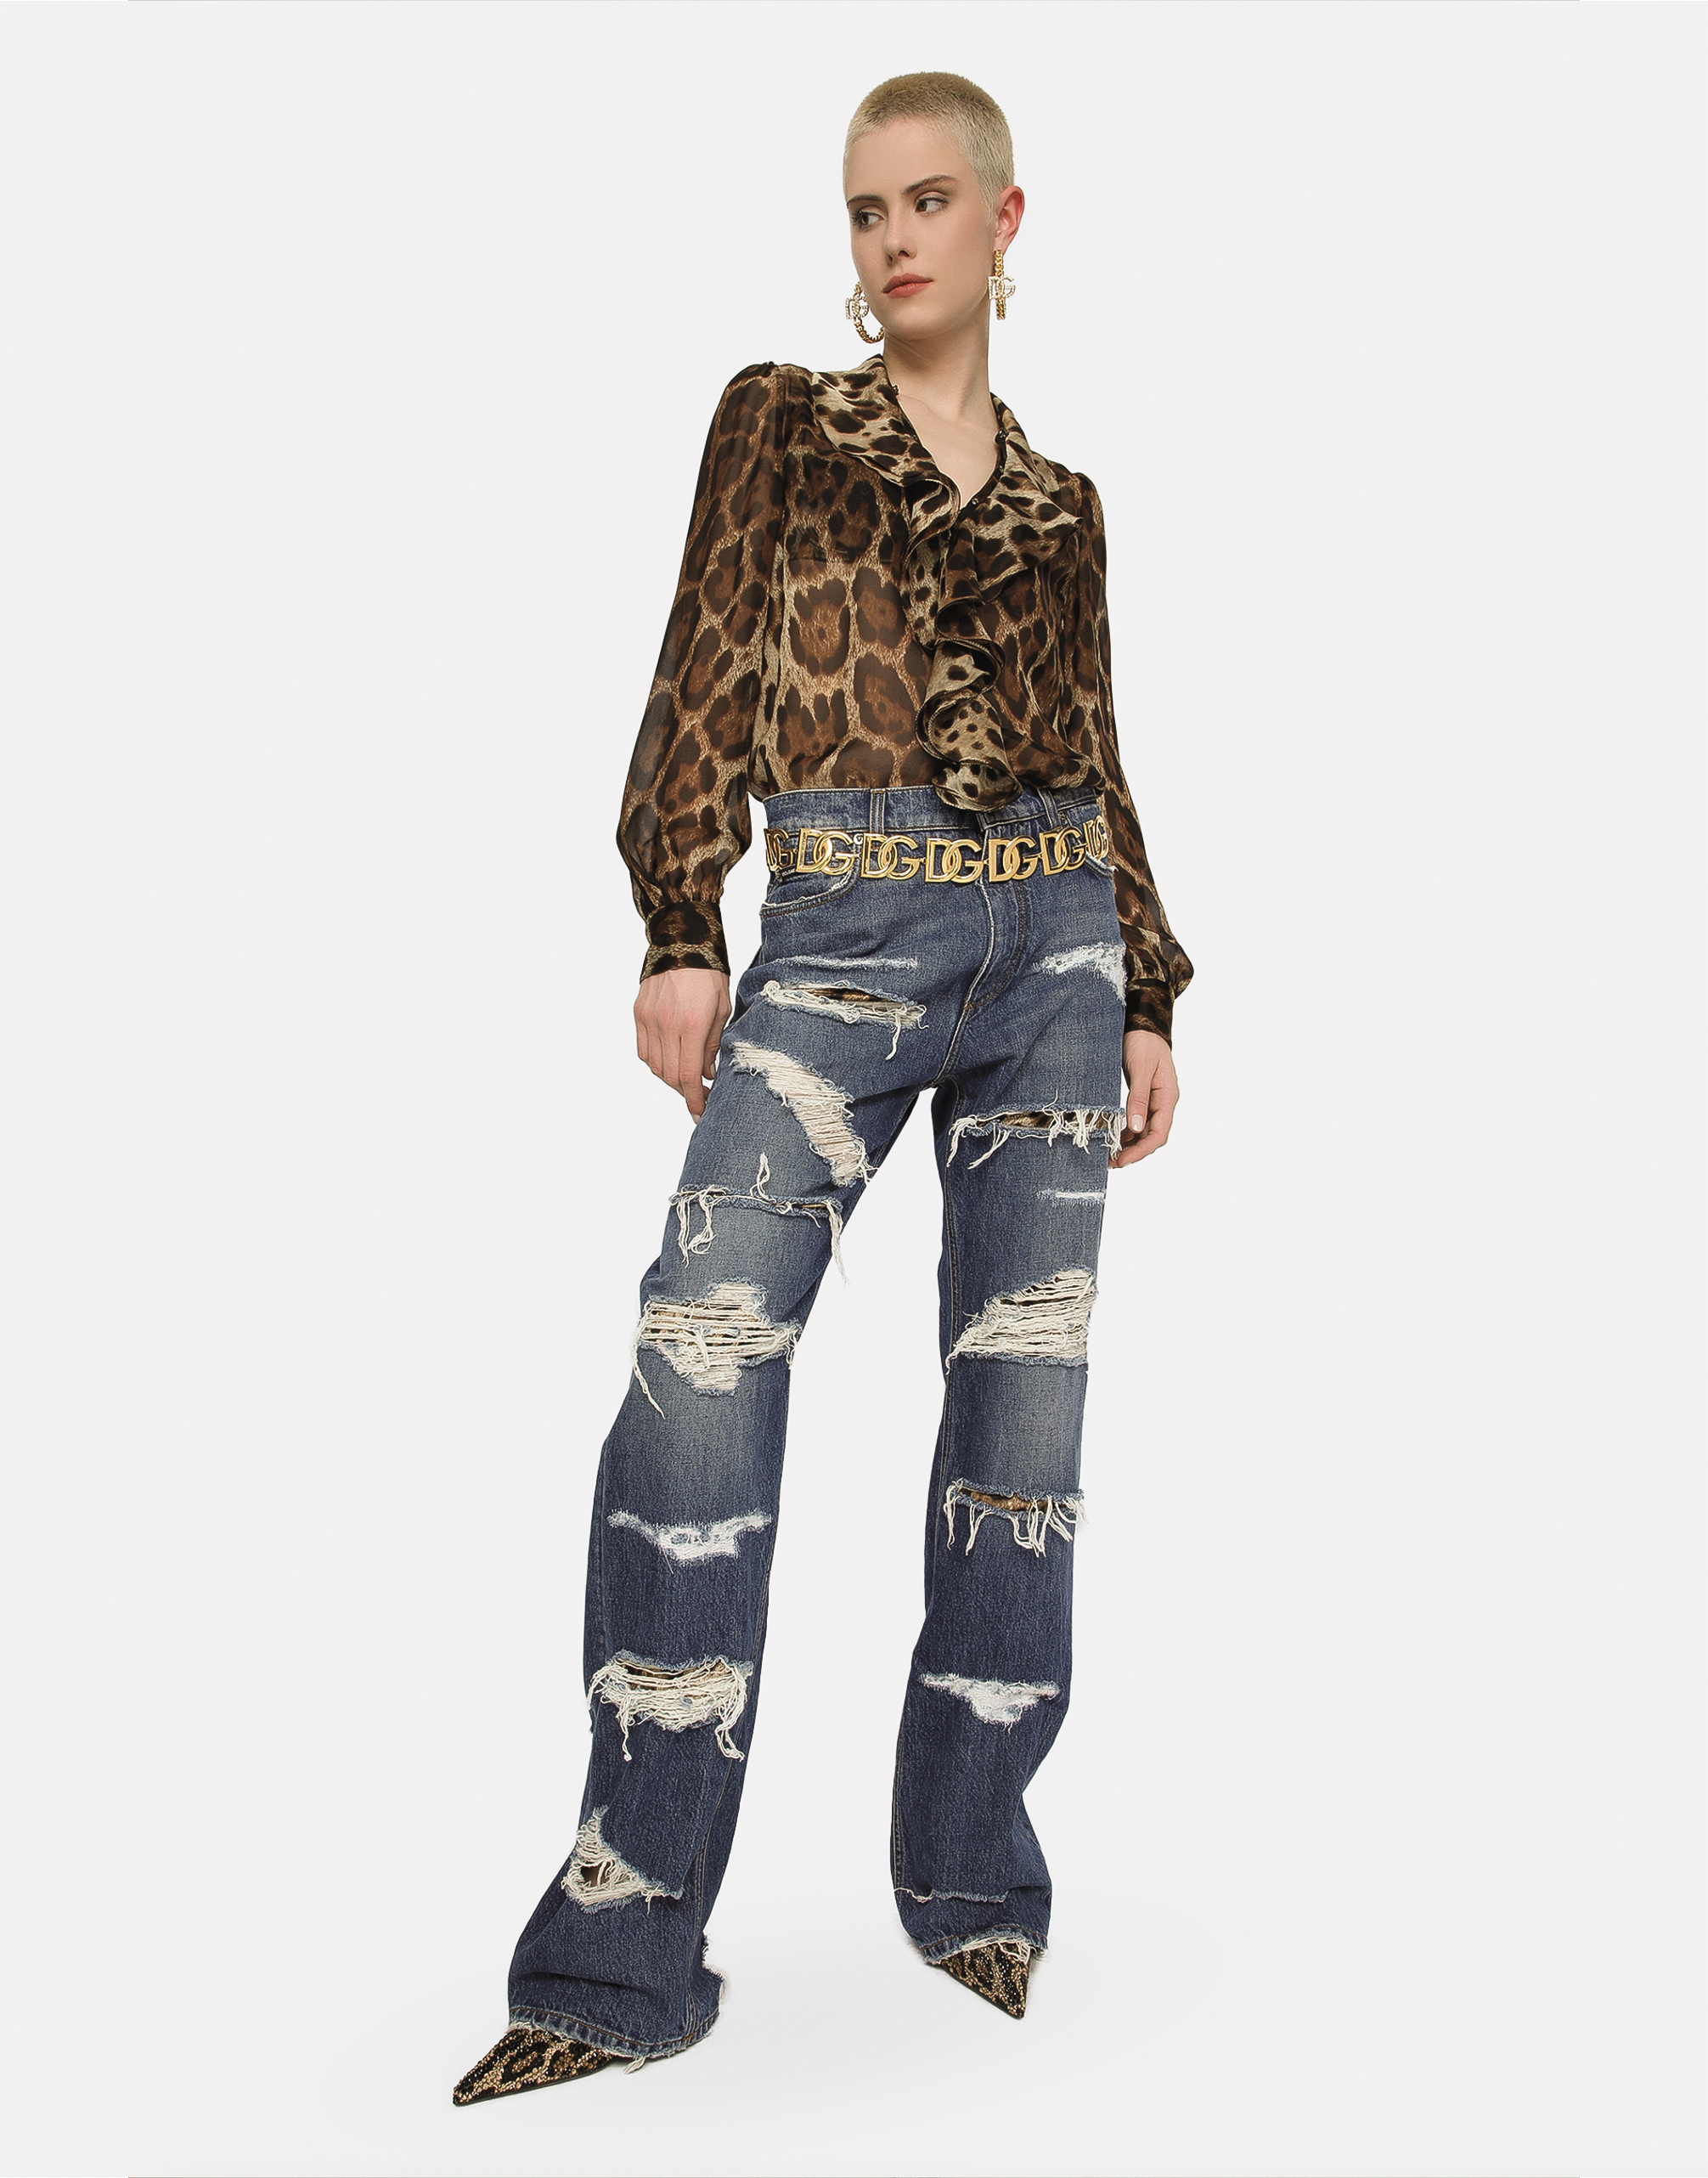 Leopard-print chiffon shirt with ruches